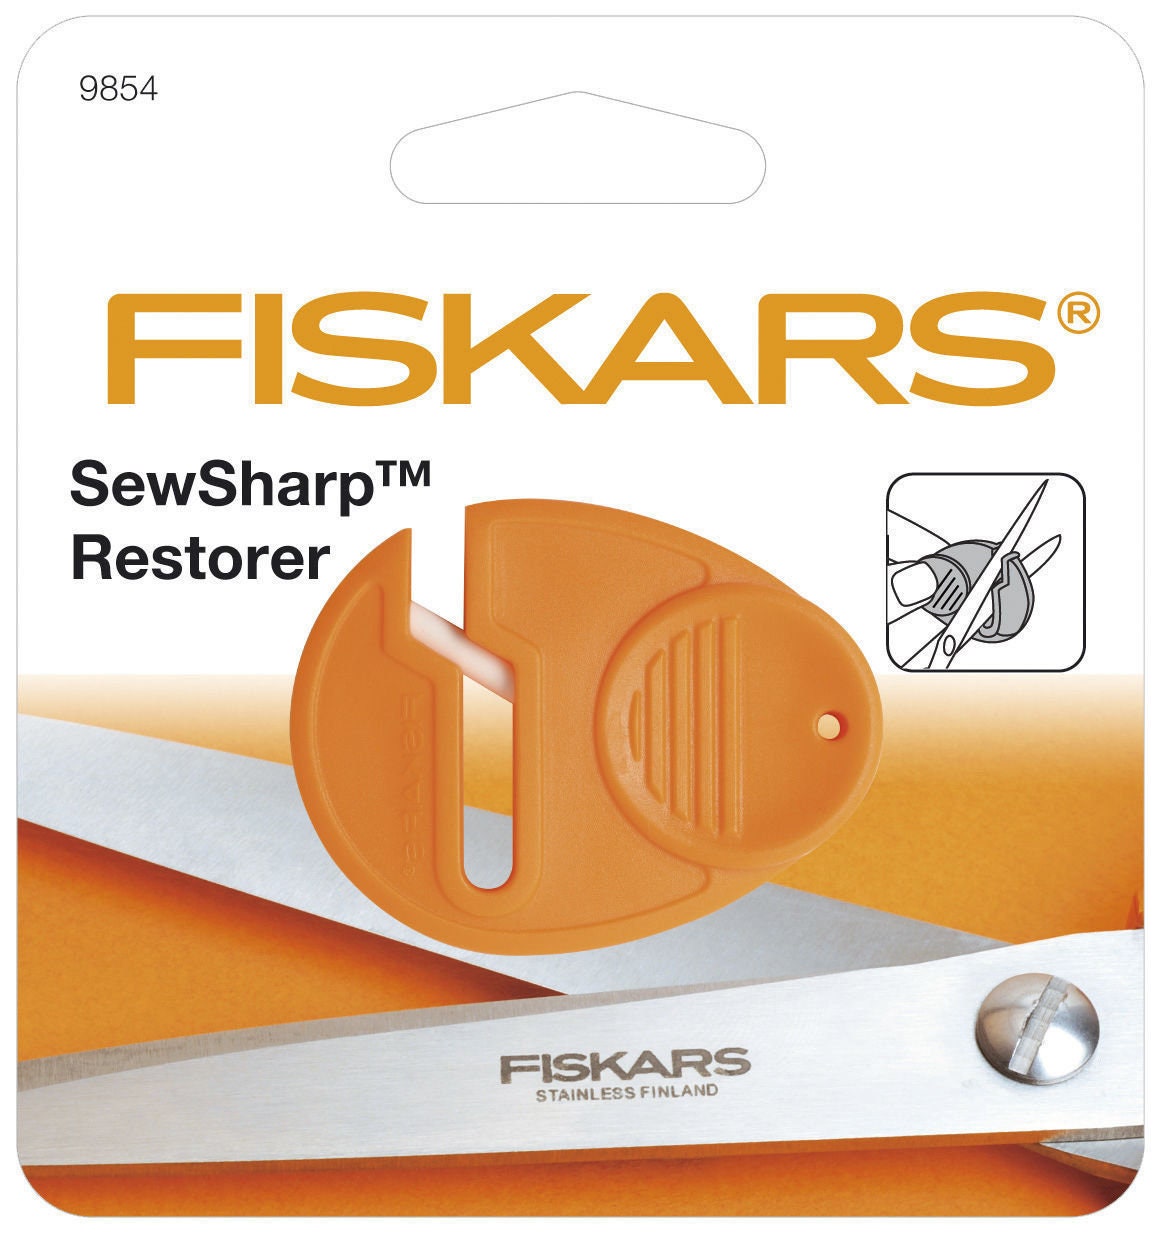 Fiskars Fabric Scissors Easy Action 26cm 